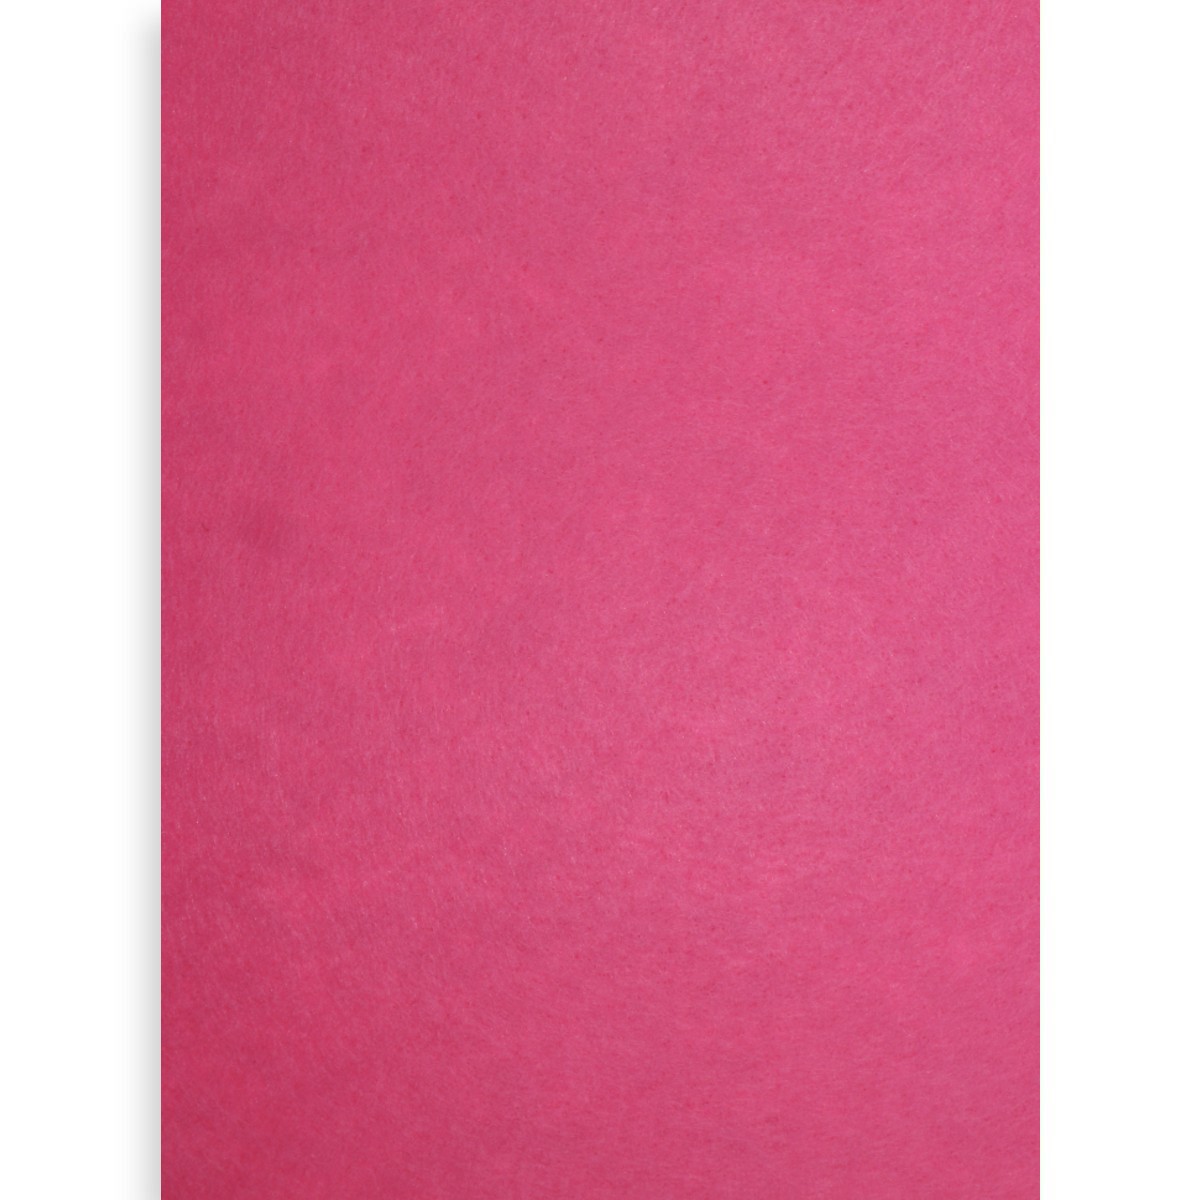 Pasla tare roz neon A4 x 2mm 812205